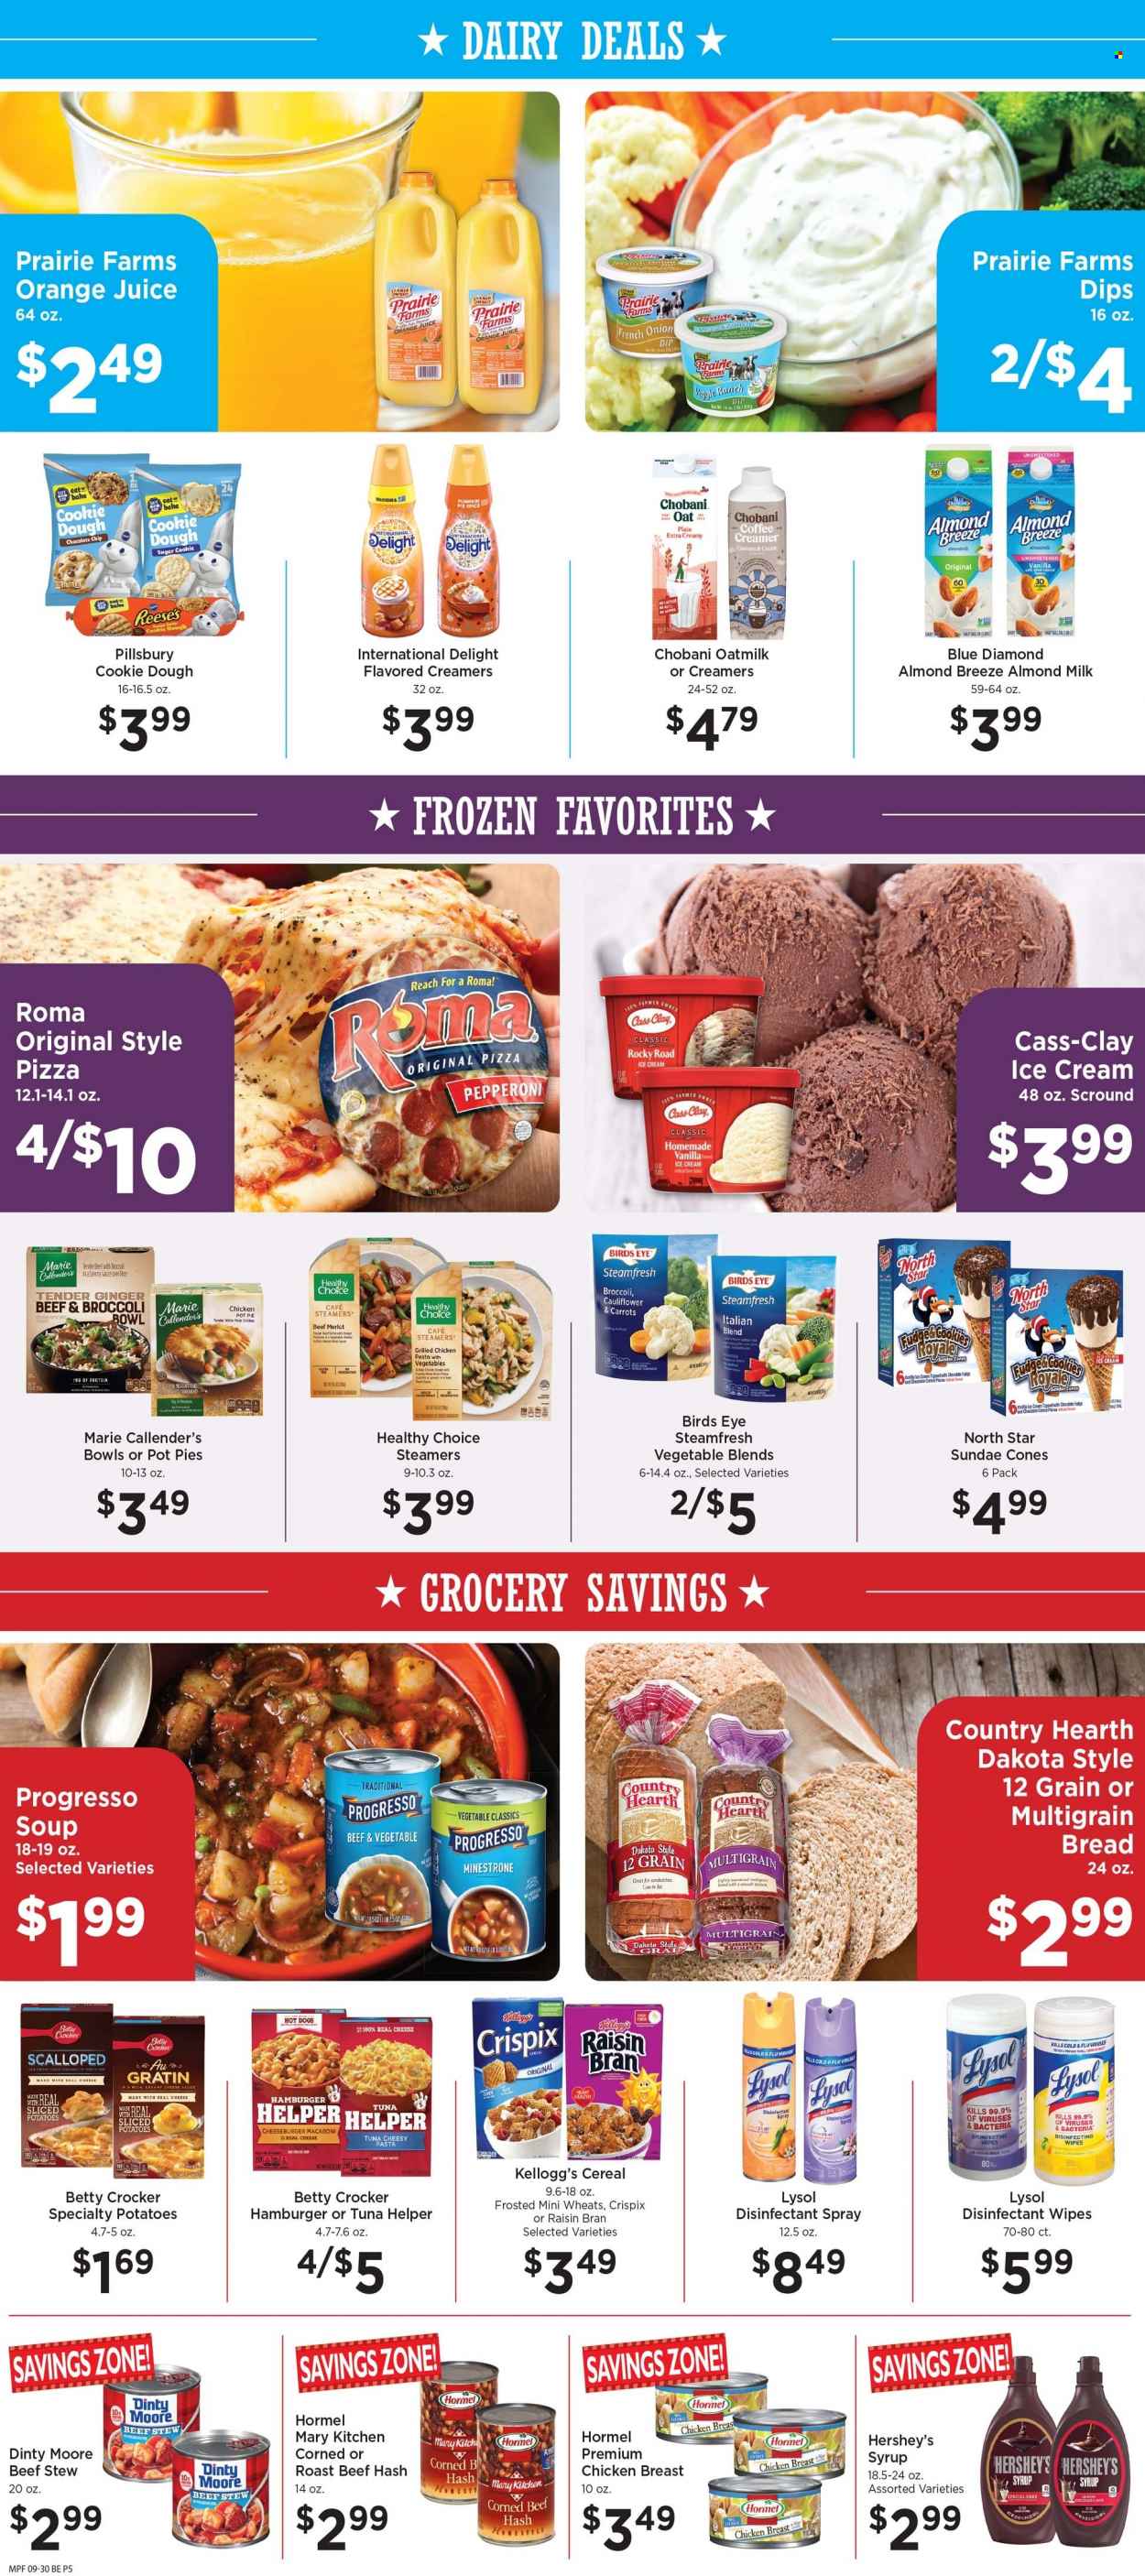 thumbnail - Marketplace Foods Flyer - 09/30/2022 - 10/06/2022 - Sales products - bread, multigrain bread, Ace, pot pie, broccoli, carrots, ginger, potatoes, tuna, beef hash, hot dog, pizza, cheeseburger, Pillsbury, Bird's Eye, Progresso, Healthy Choice, Marie Callender's, Hormel, pepperoni, corned beef, Chobani, almond milk, milk, Almond Breeze, oat milk, creamer, dip, ice cream, Reese's, Hershey's, cookie dough, Kellogg's, oats, cereals, Raisin Bran, syrup, Blue Diamond, orange juice, juice, coffee, chicken breasts, beef meat, roast beef. Page 5.